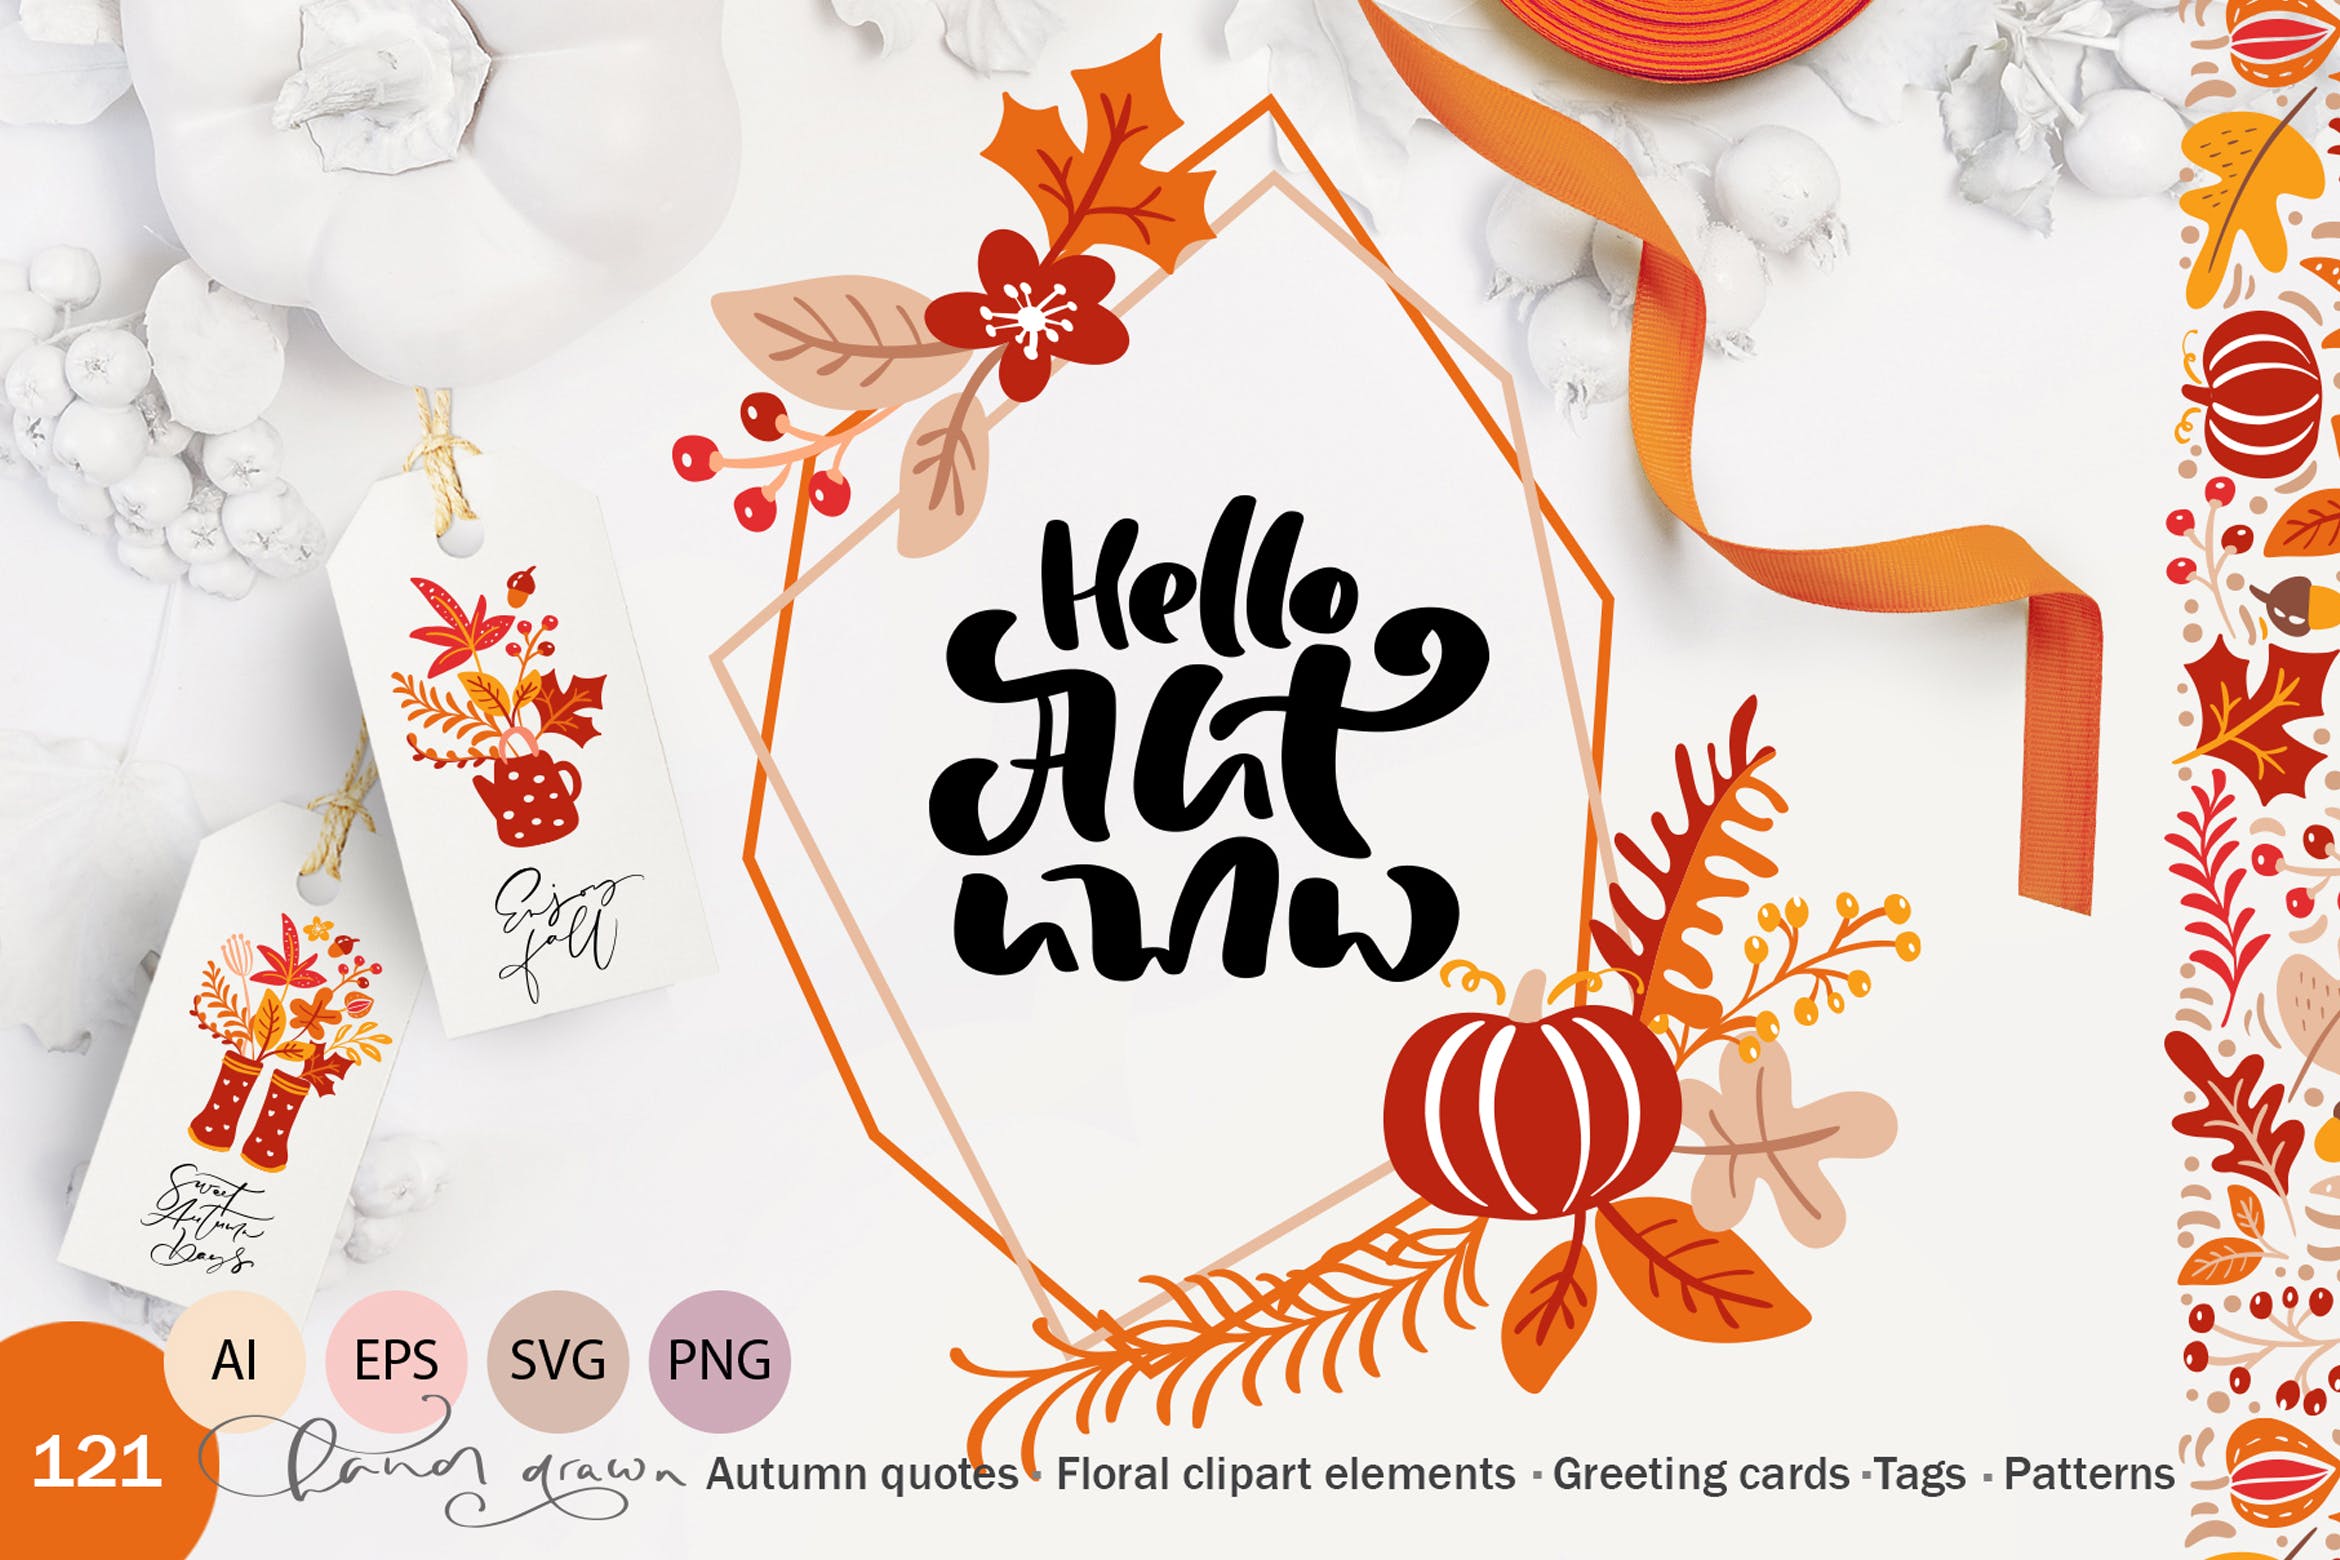 矢量书法和花卉元素图案花纹素材Autumn vector calligraphy floral elements